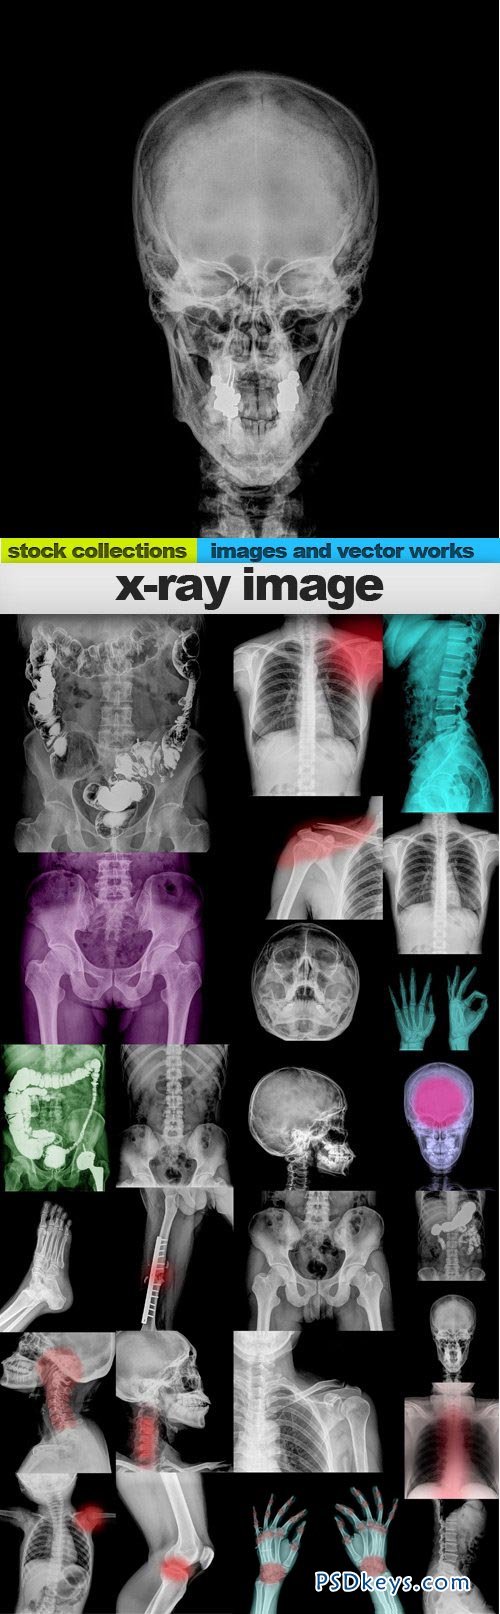 X-ray image 25xUHQ JPEG